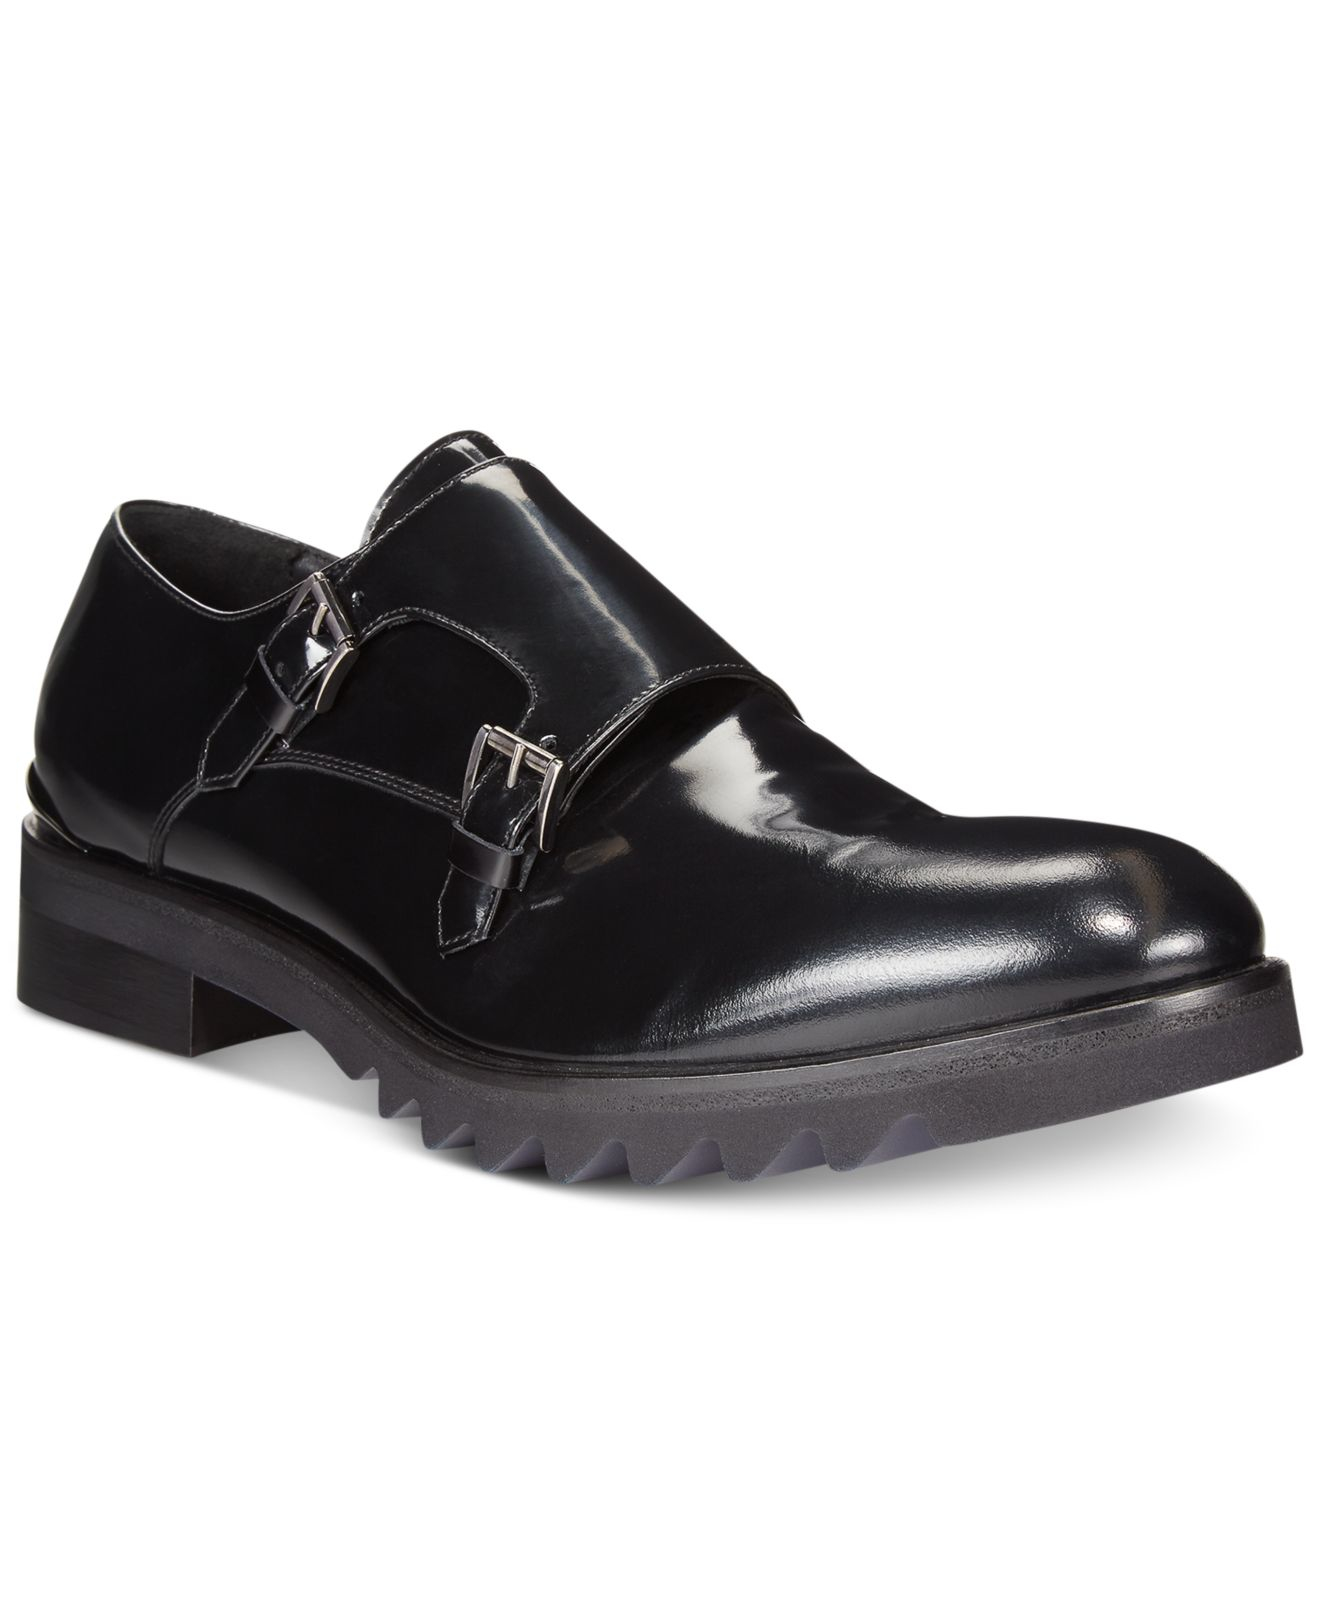 Lyst - John Galliano Plain Toe Lug Sole Loafers in Black for Men